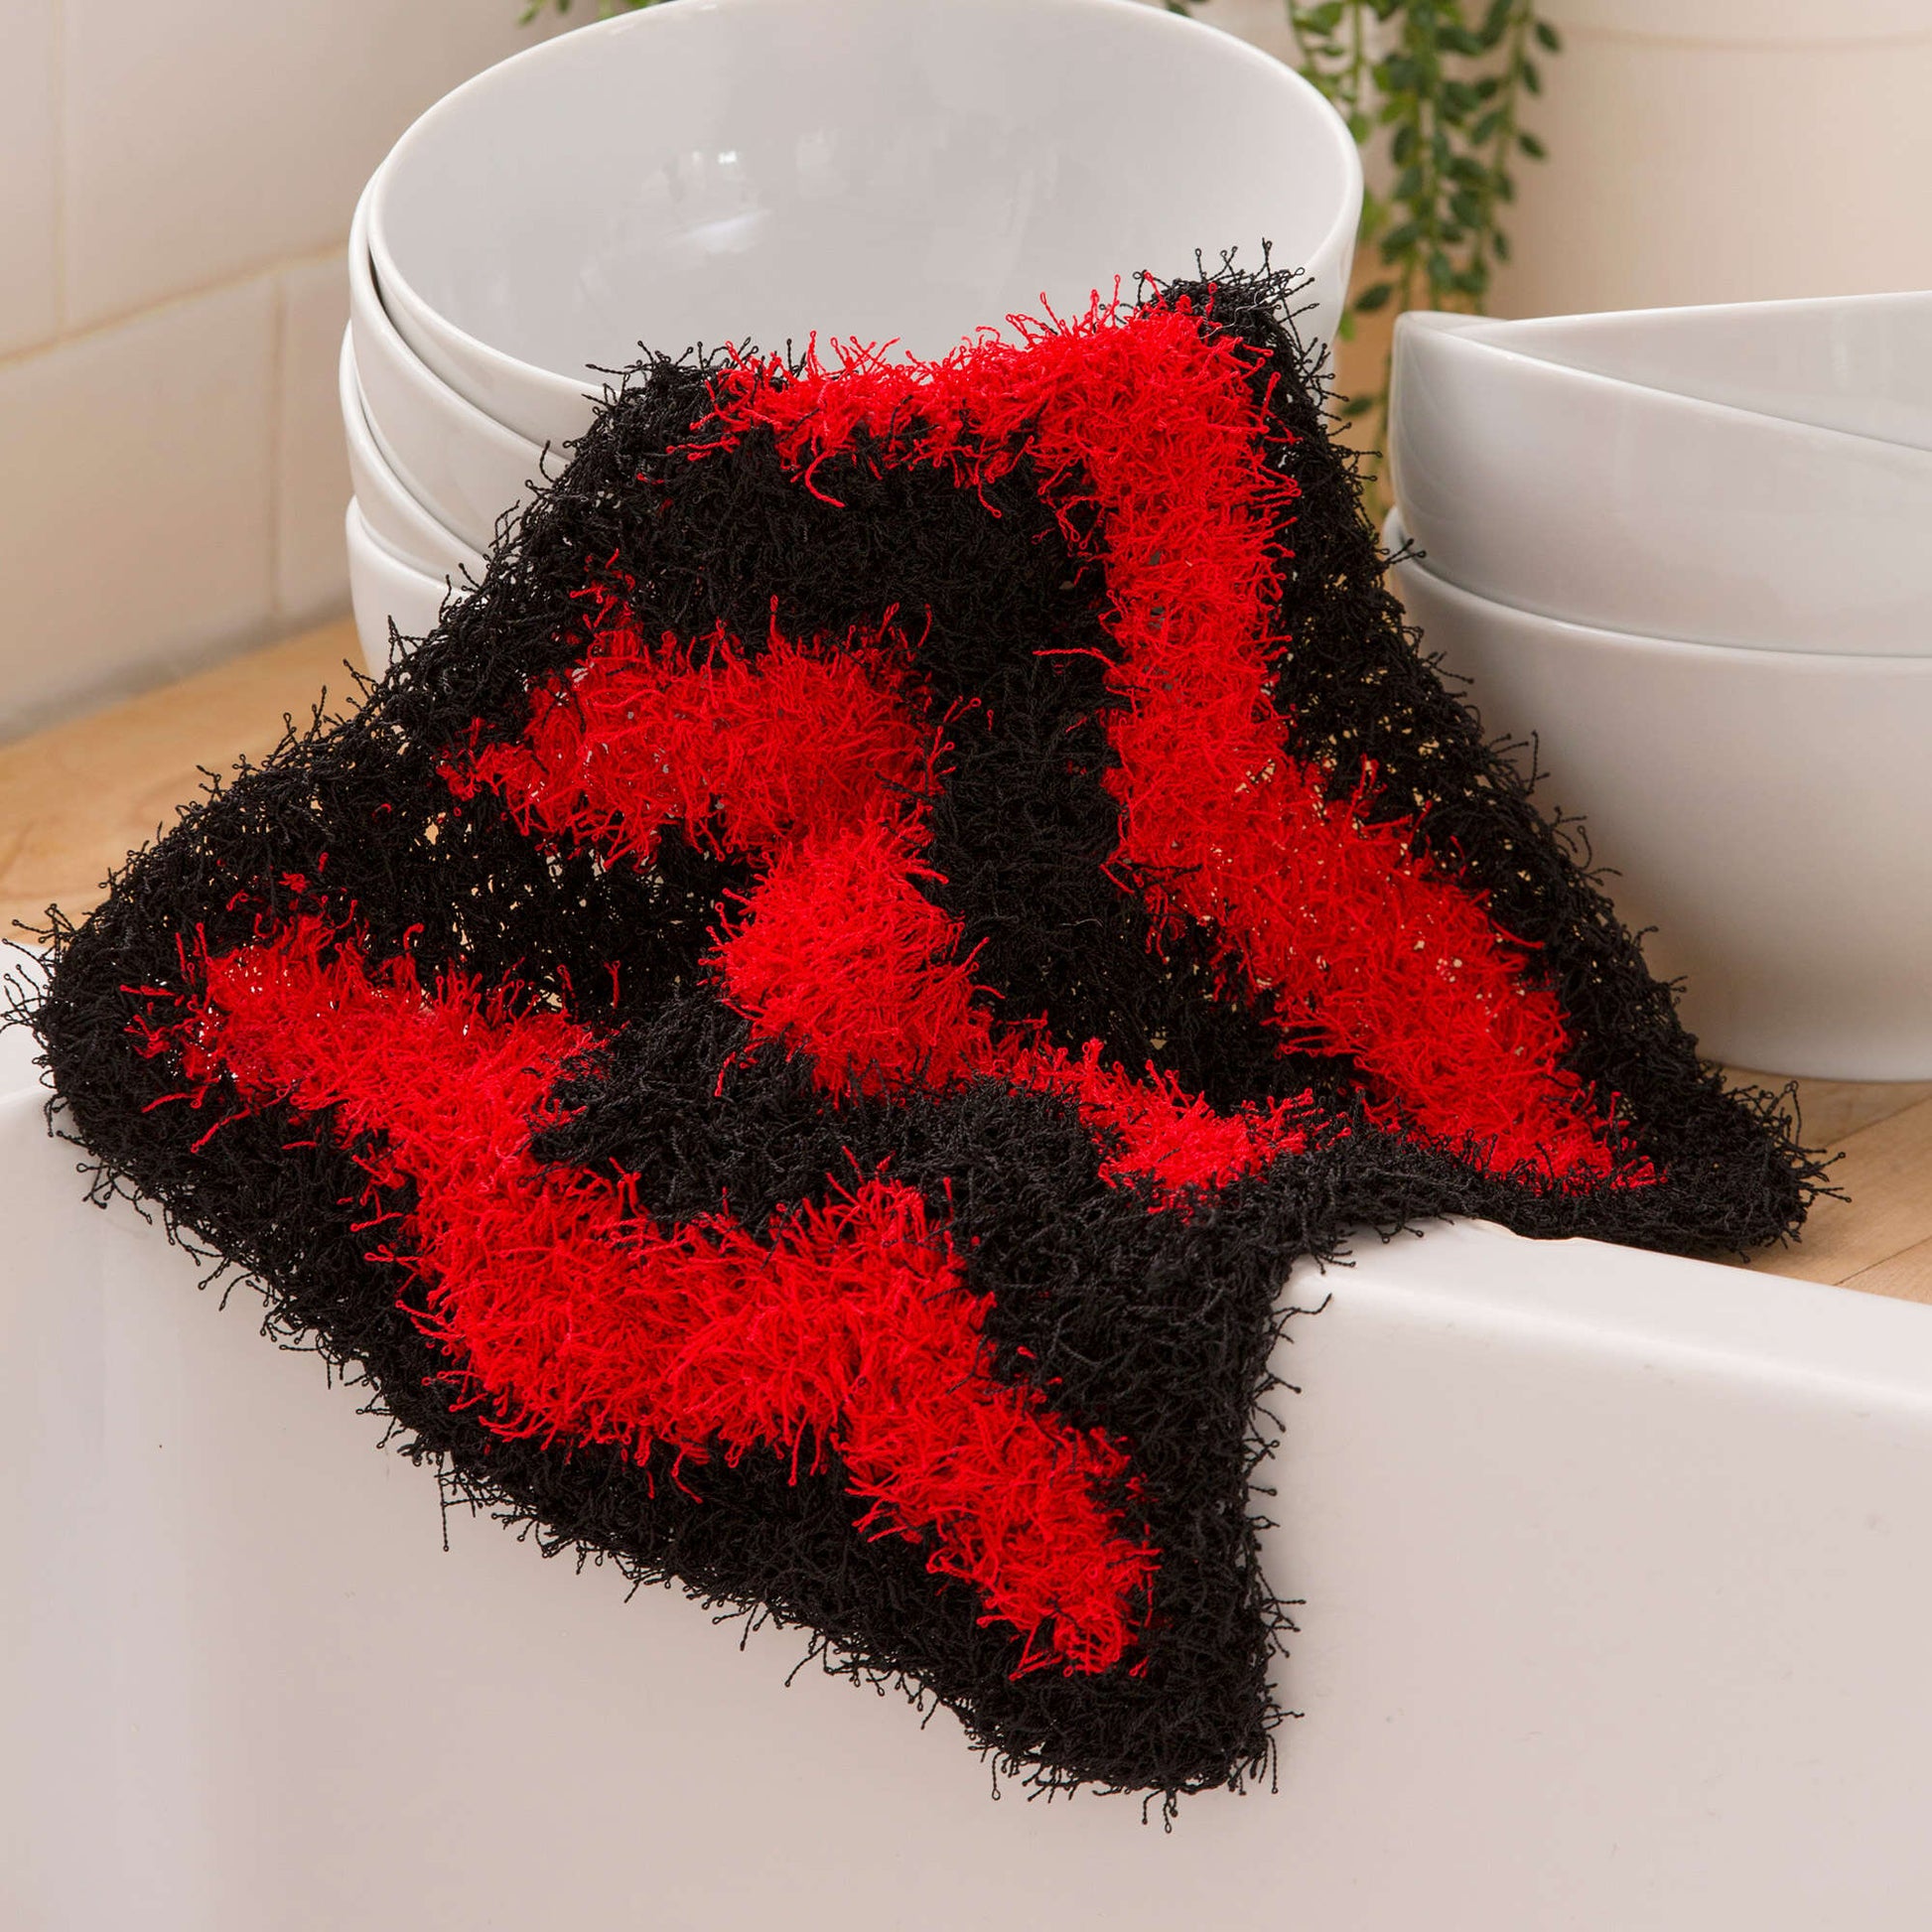 Free Red Heart Crochet Chevron Dish Scrub Pattern